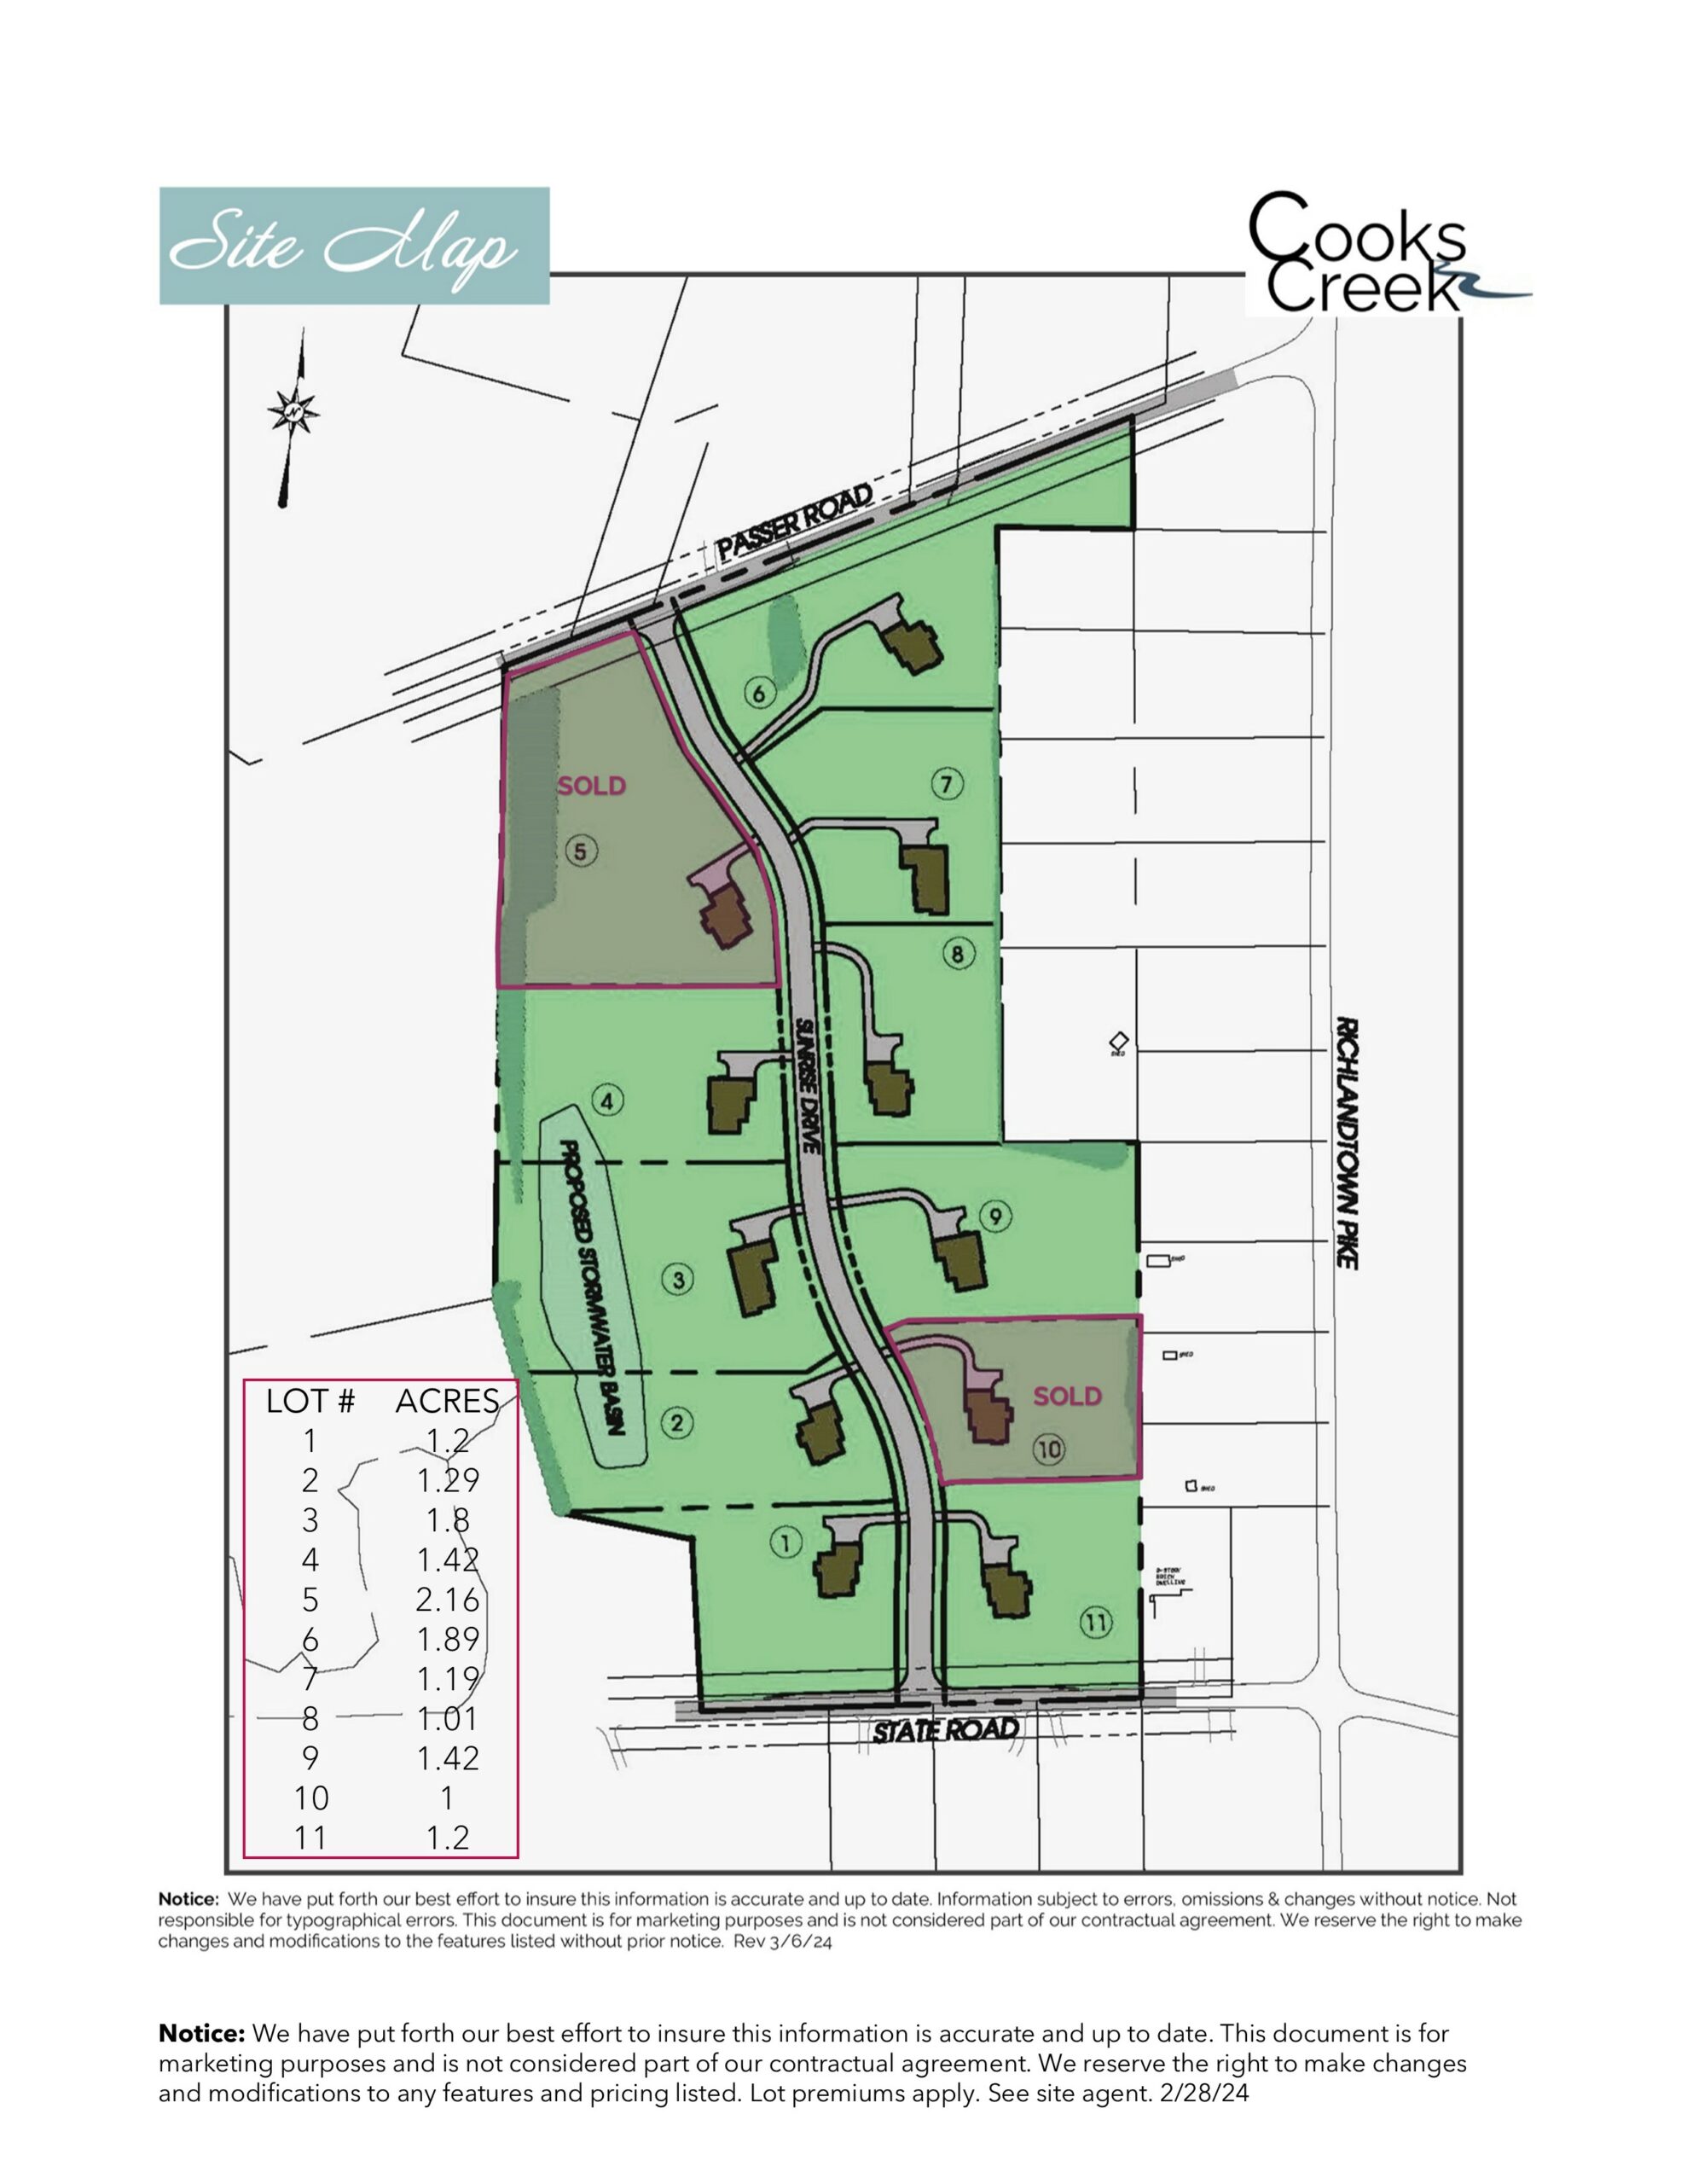 Cooks Creek-Brochure Plan 4-18-24